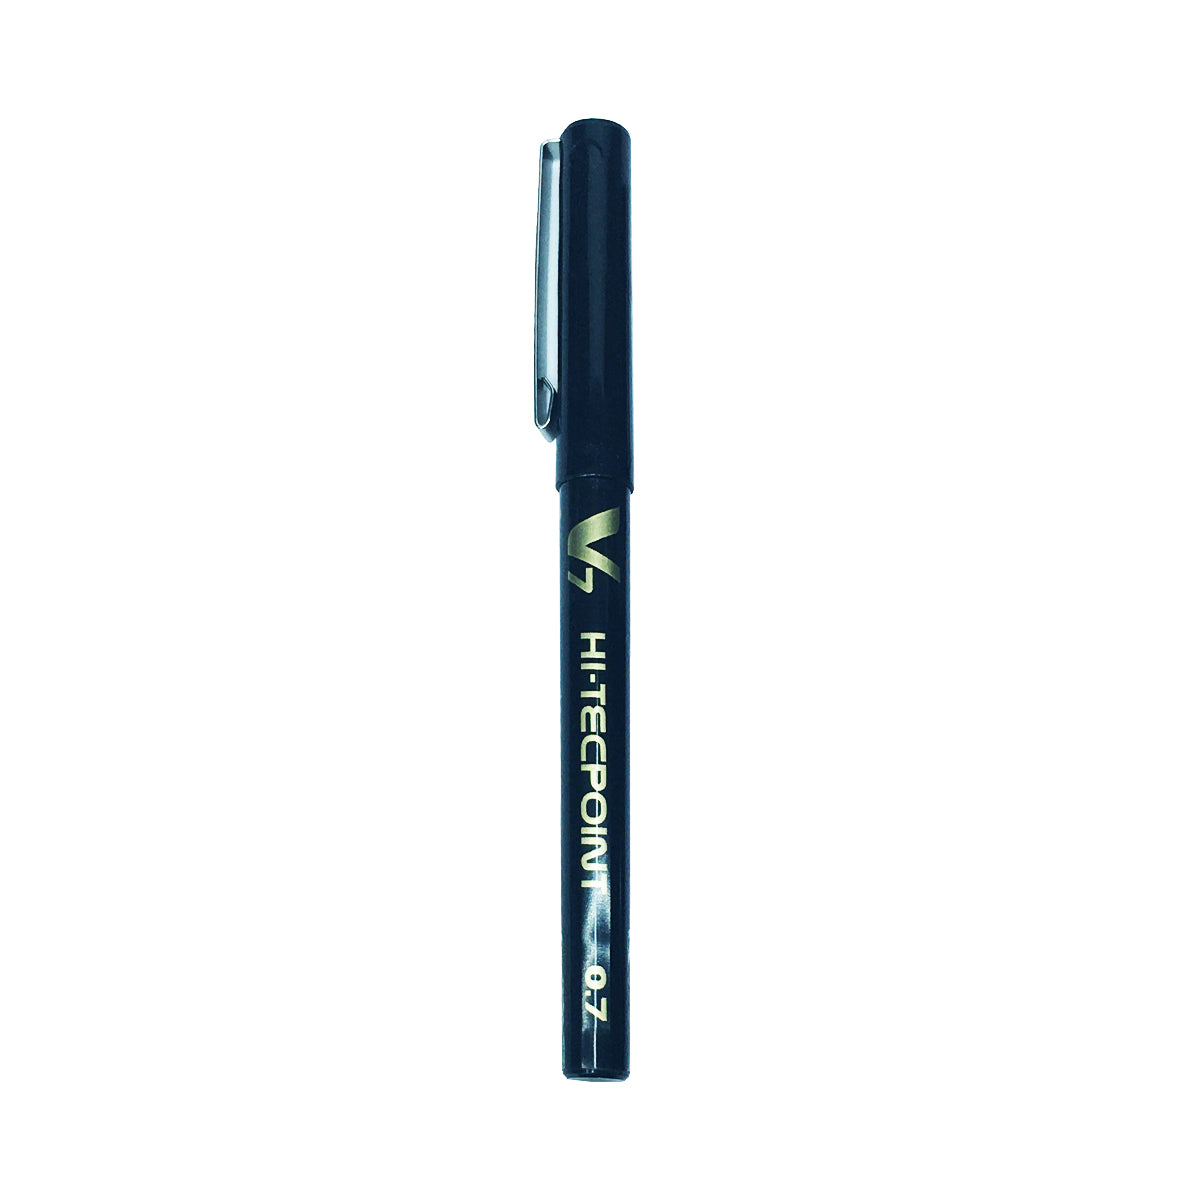 Shop Pilot V7 Hi Tecpoint Liquid Ink Black Pen online in Abu Dhabi, UAE.